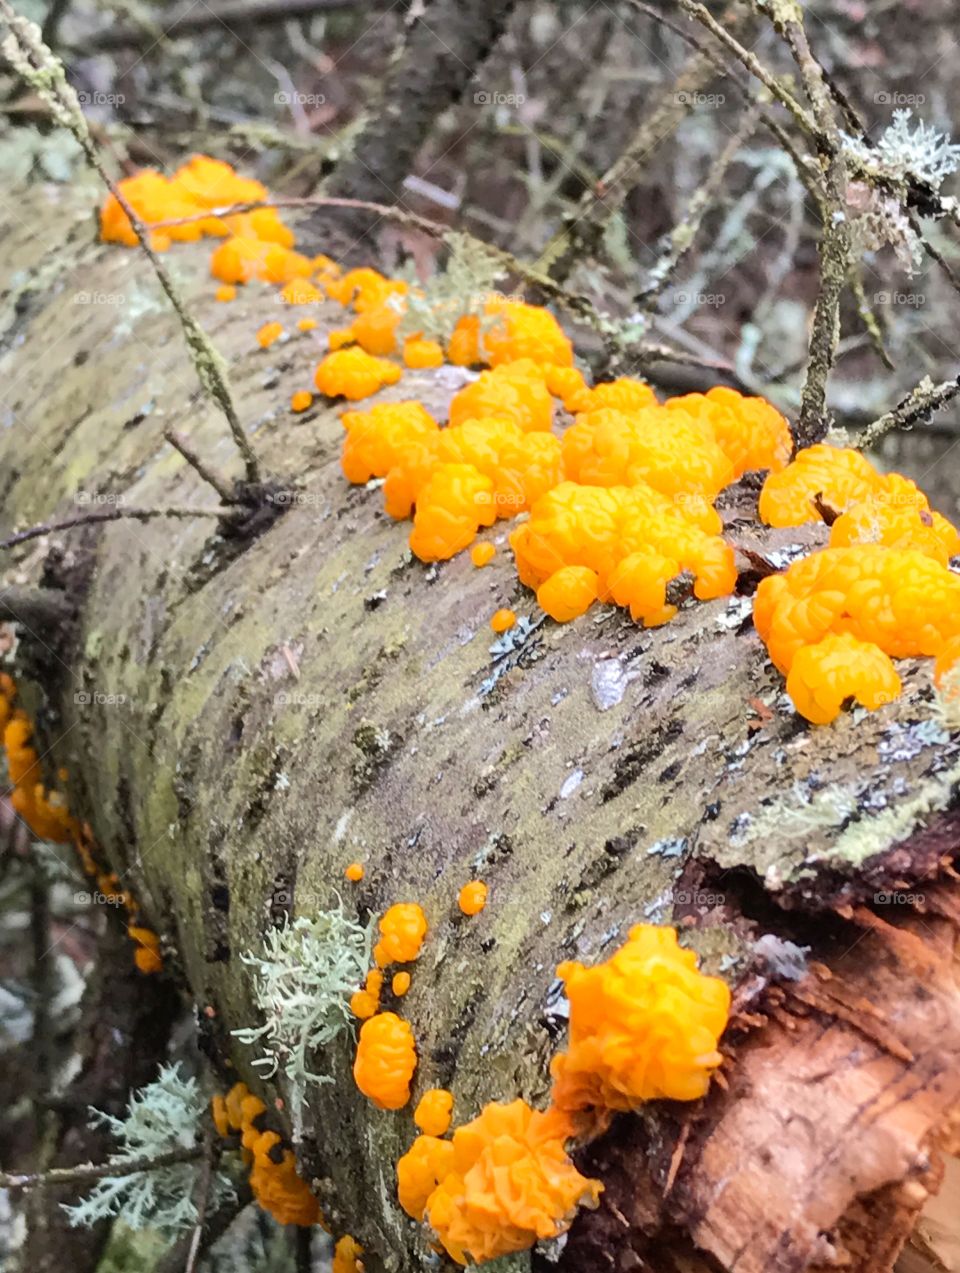 Orange can be a real Fungi!